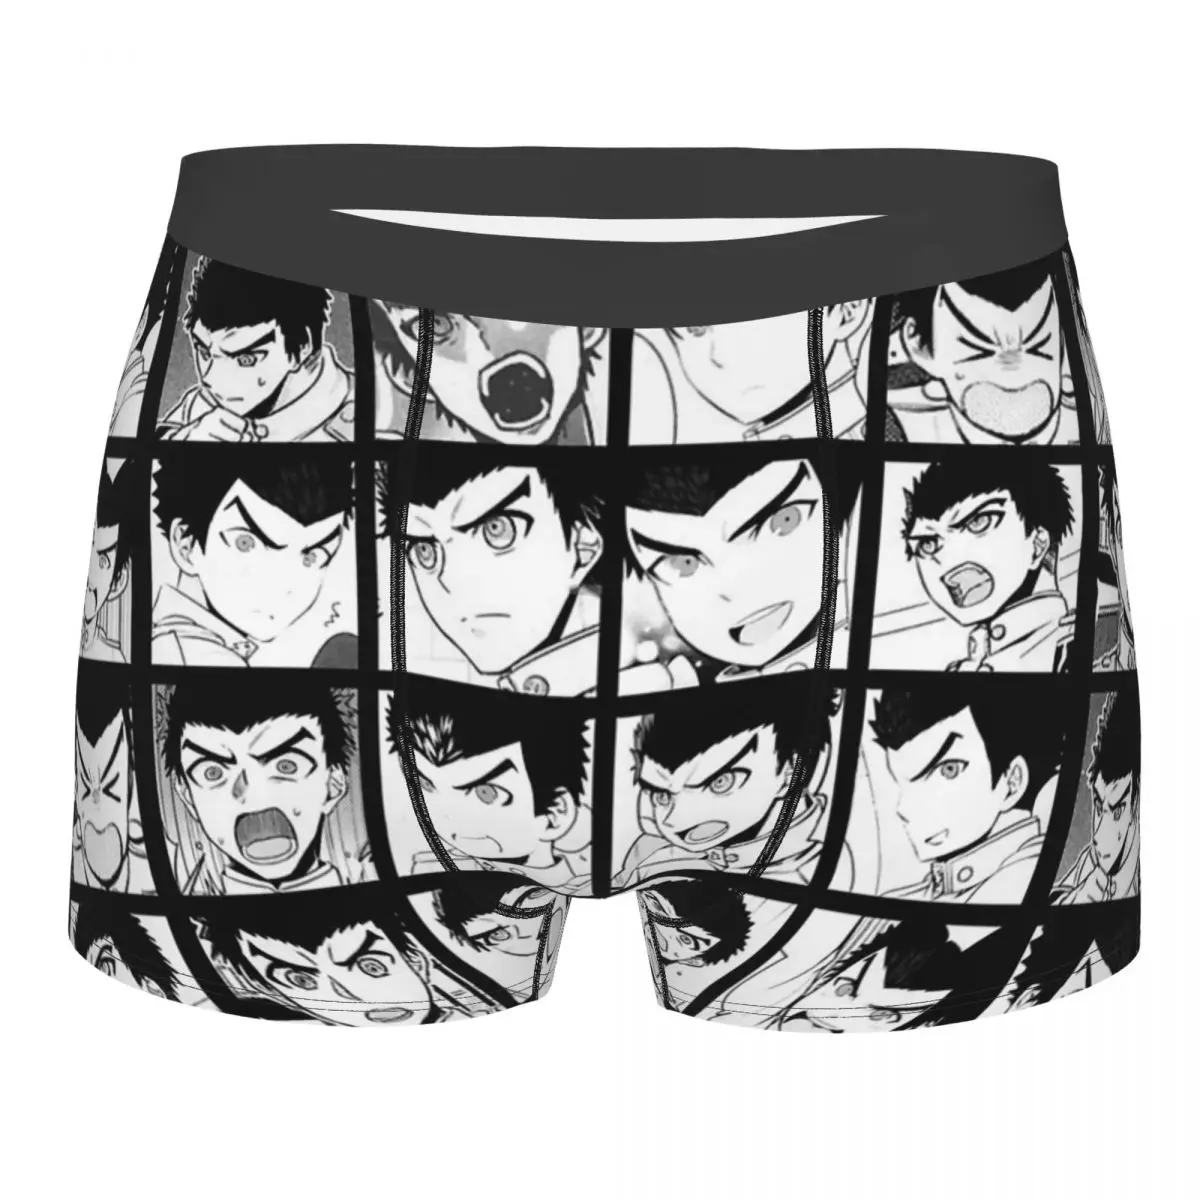 

Ishimaru Manga Collection Danganronpa Trigger Happy Havoc Underpants Cotton Panties Male Underwear Sexy Shorts Boxer Briefs